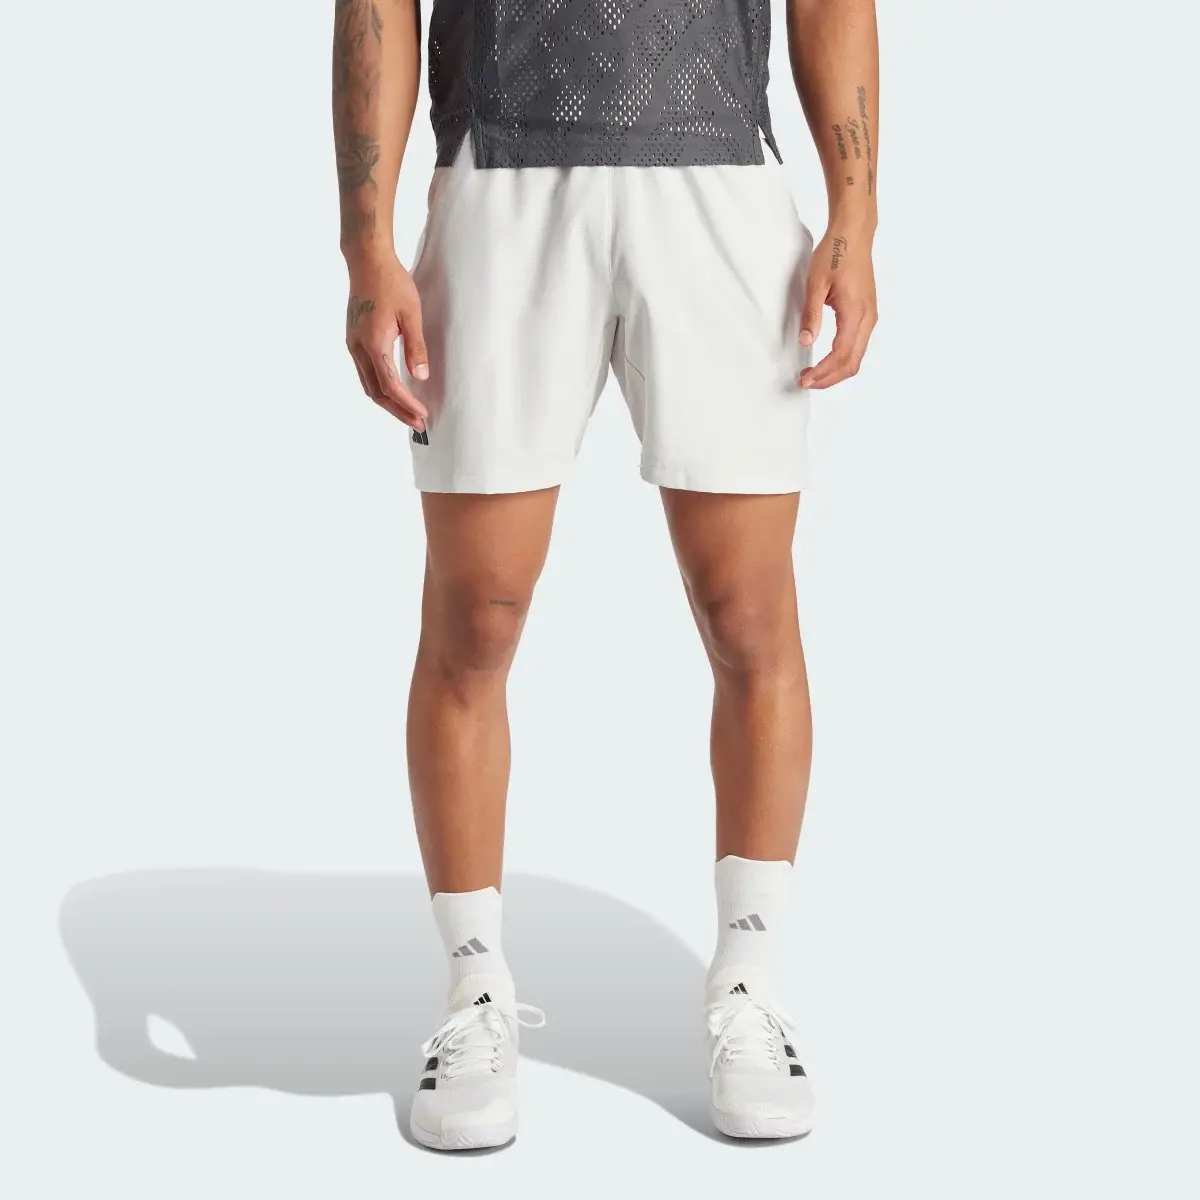 Adidas Tennis HEAT.RDY Shorts and Inner Shorts Set. 2